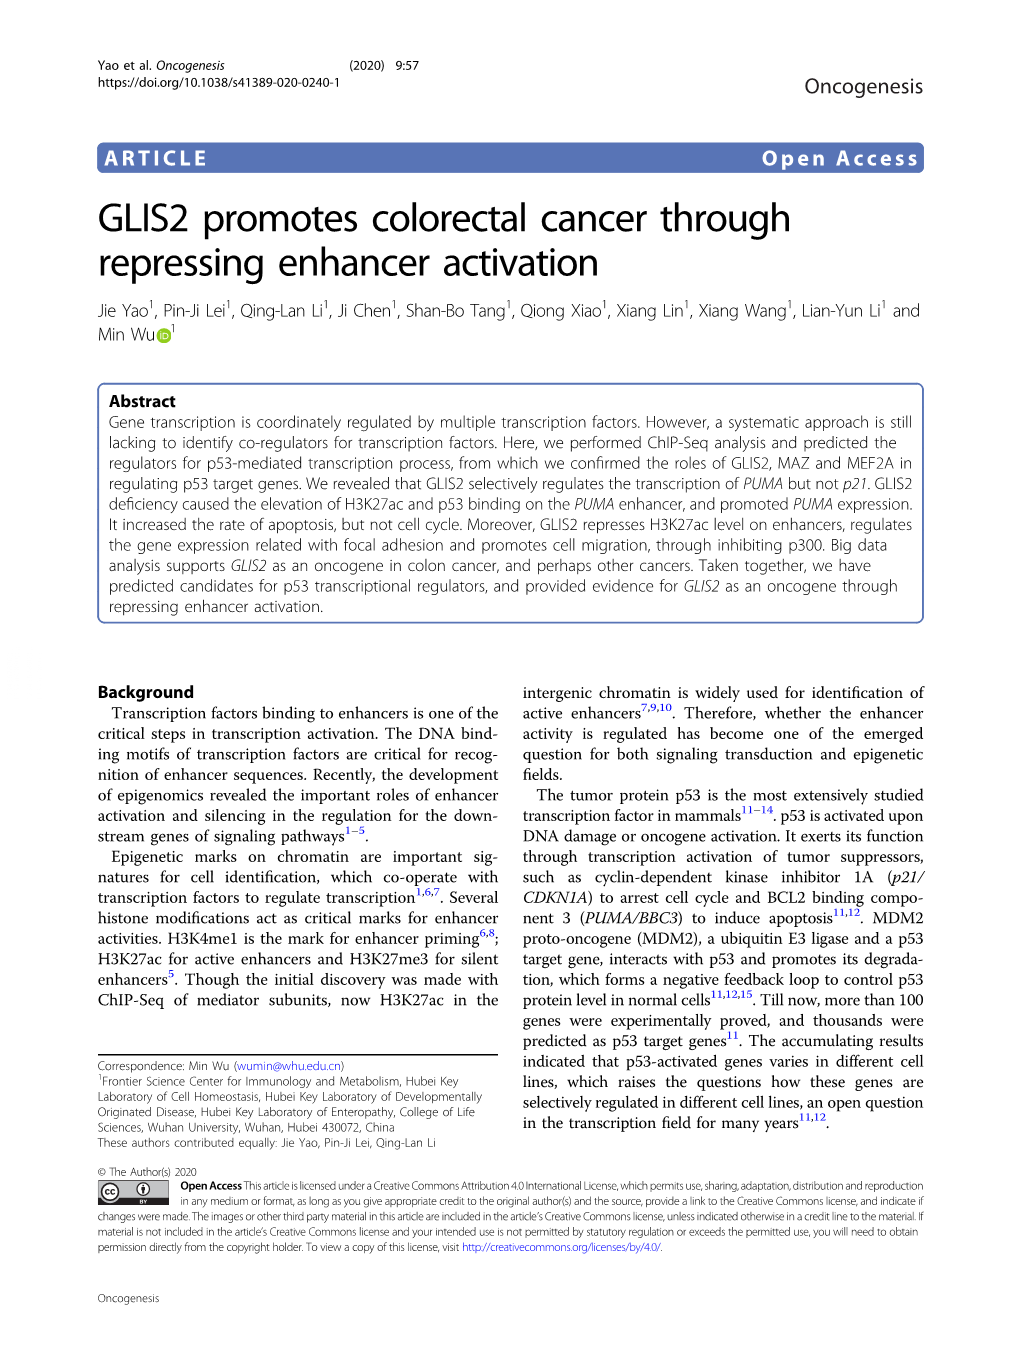 GLIS2 Promotes Colorectal Cancer Through Repressing Enhancer